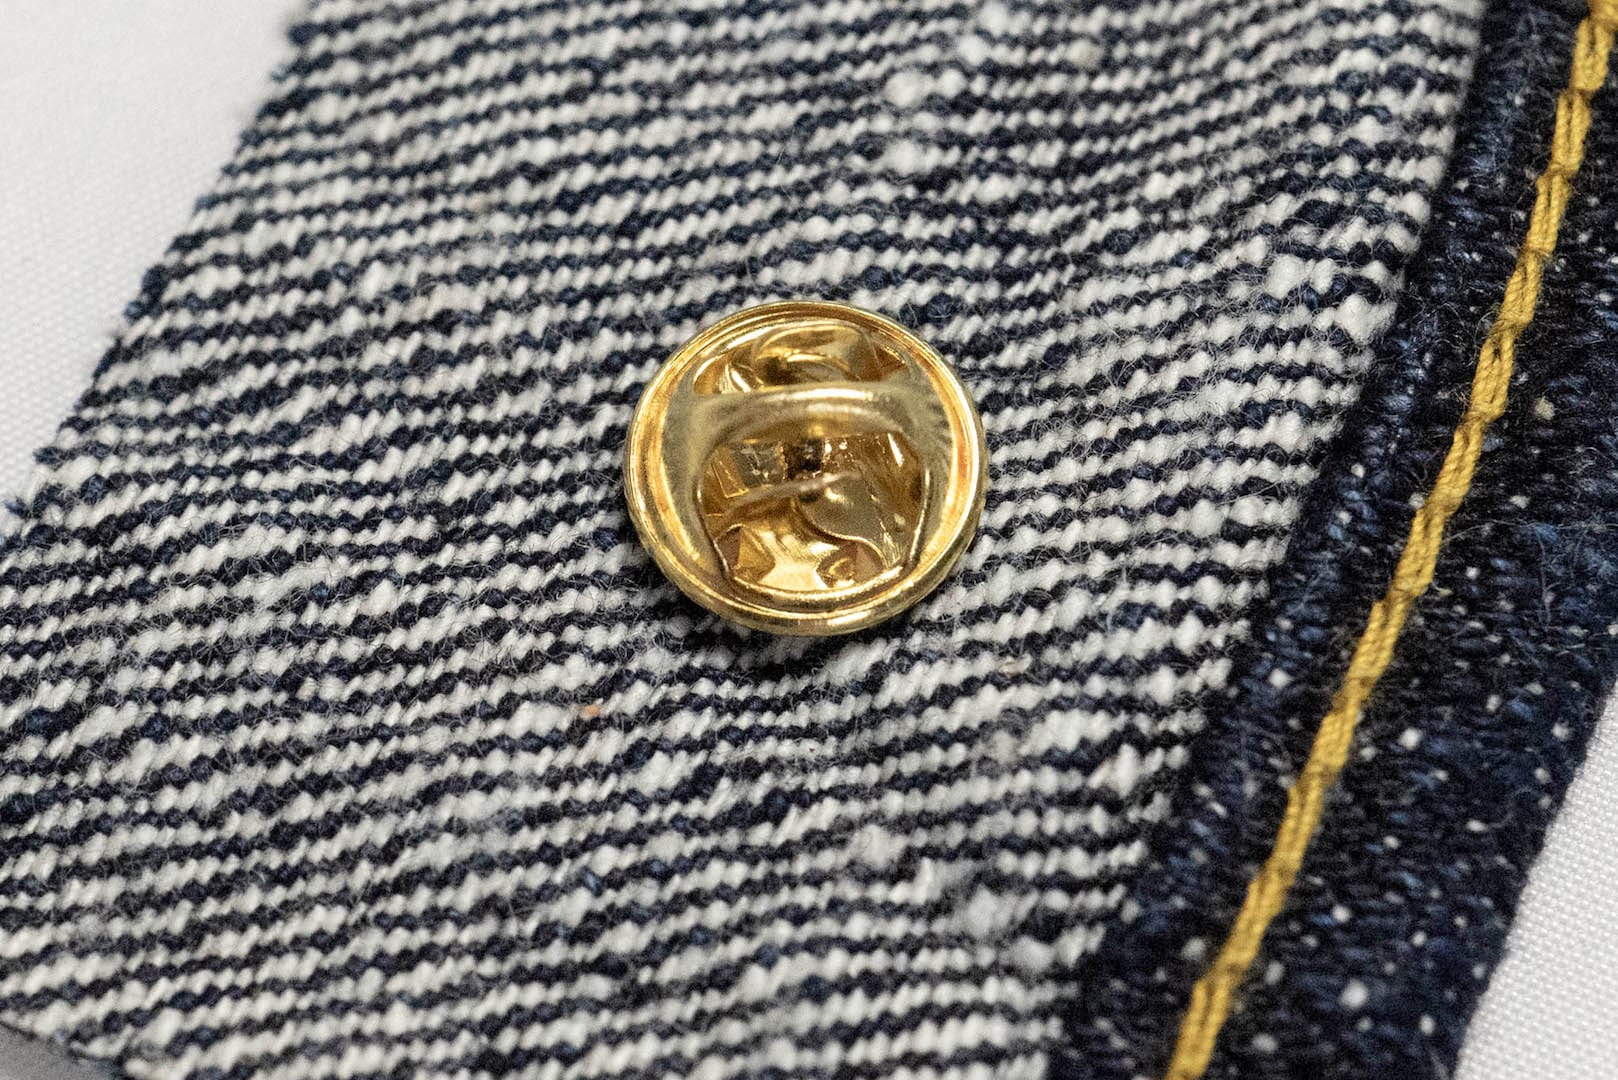 Samurai "Rivet" Button Pin